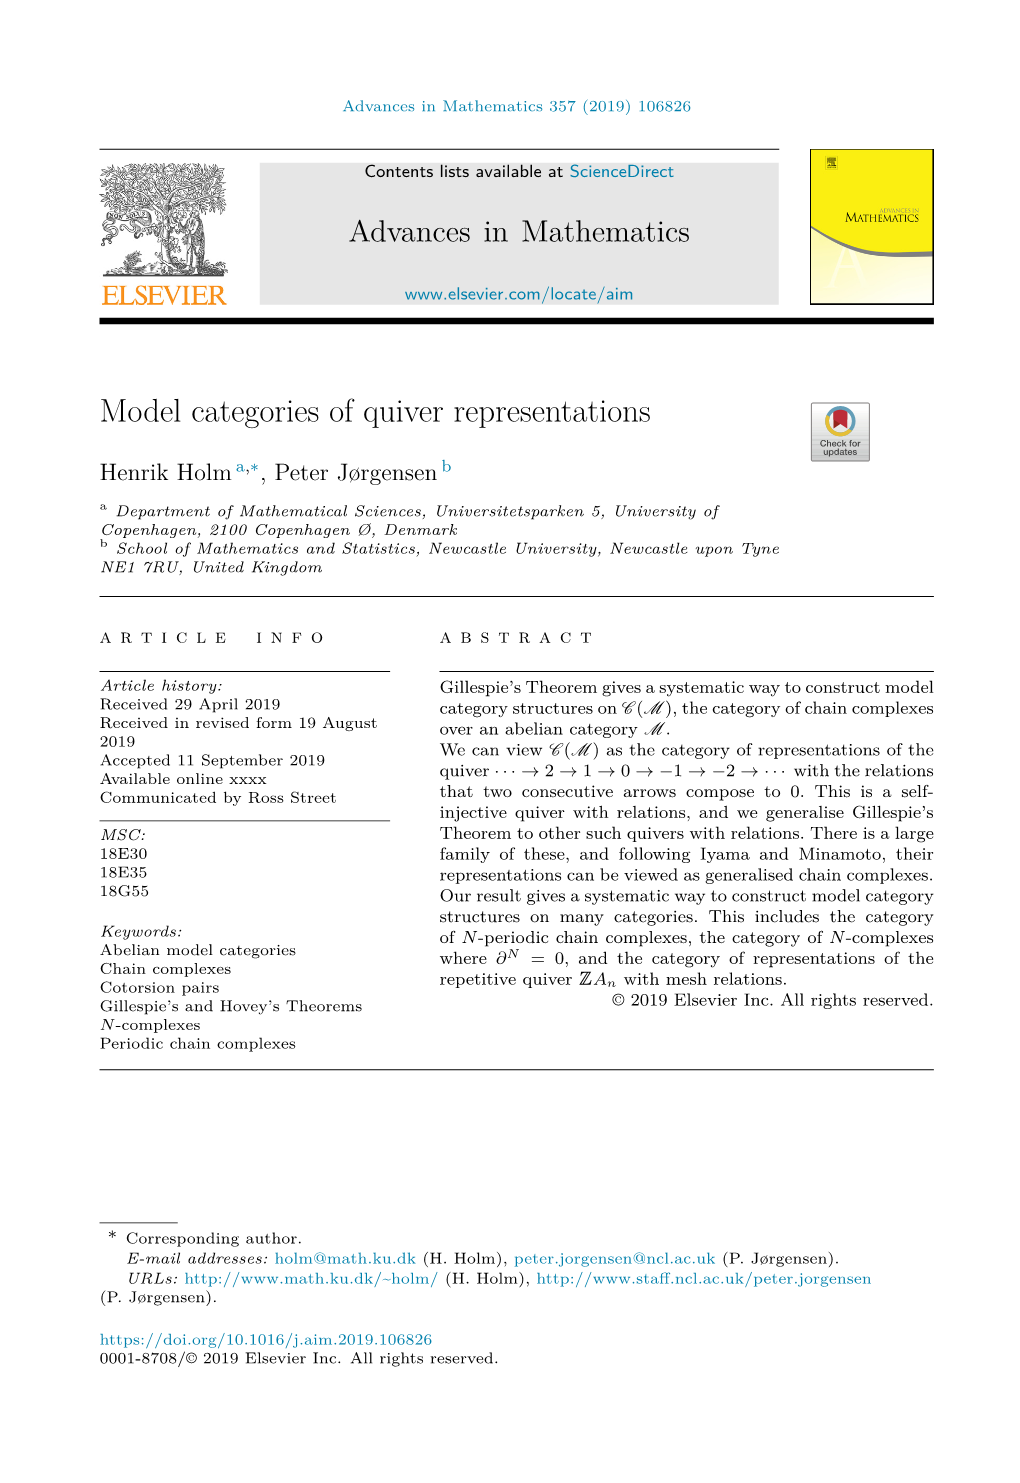 Model Categories of Quiver Representations